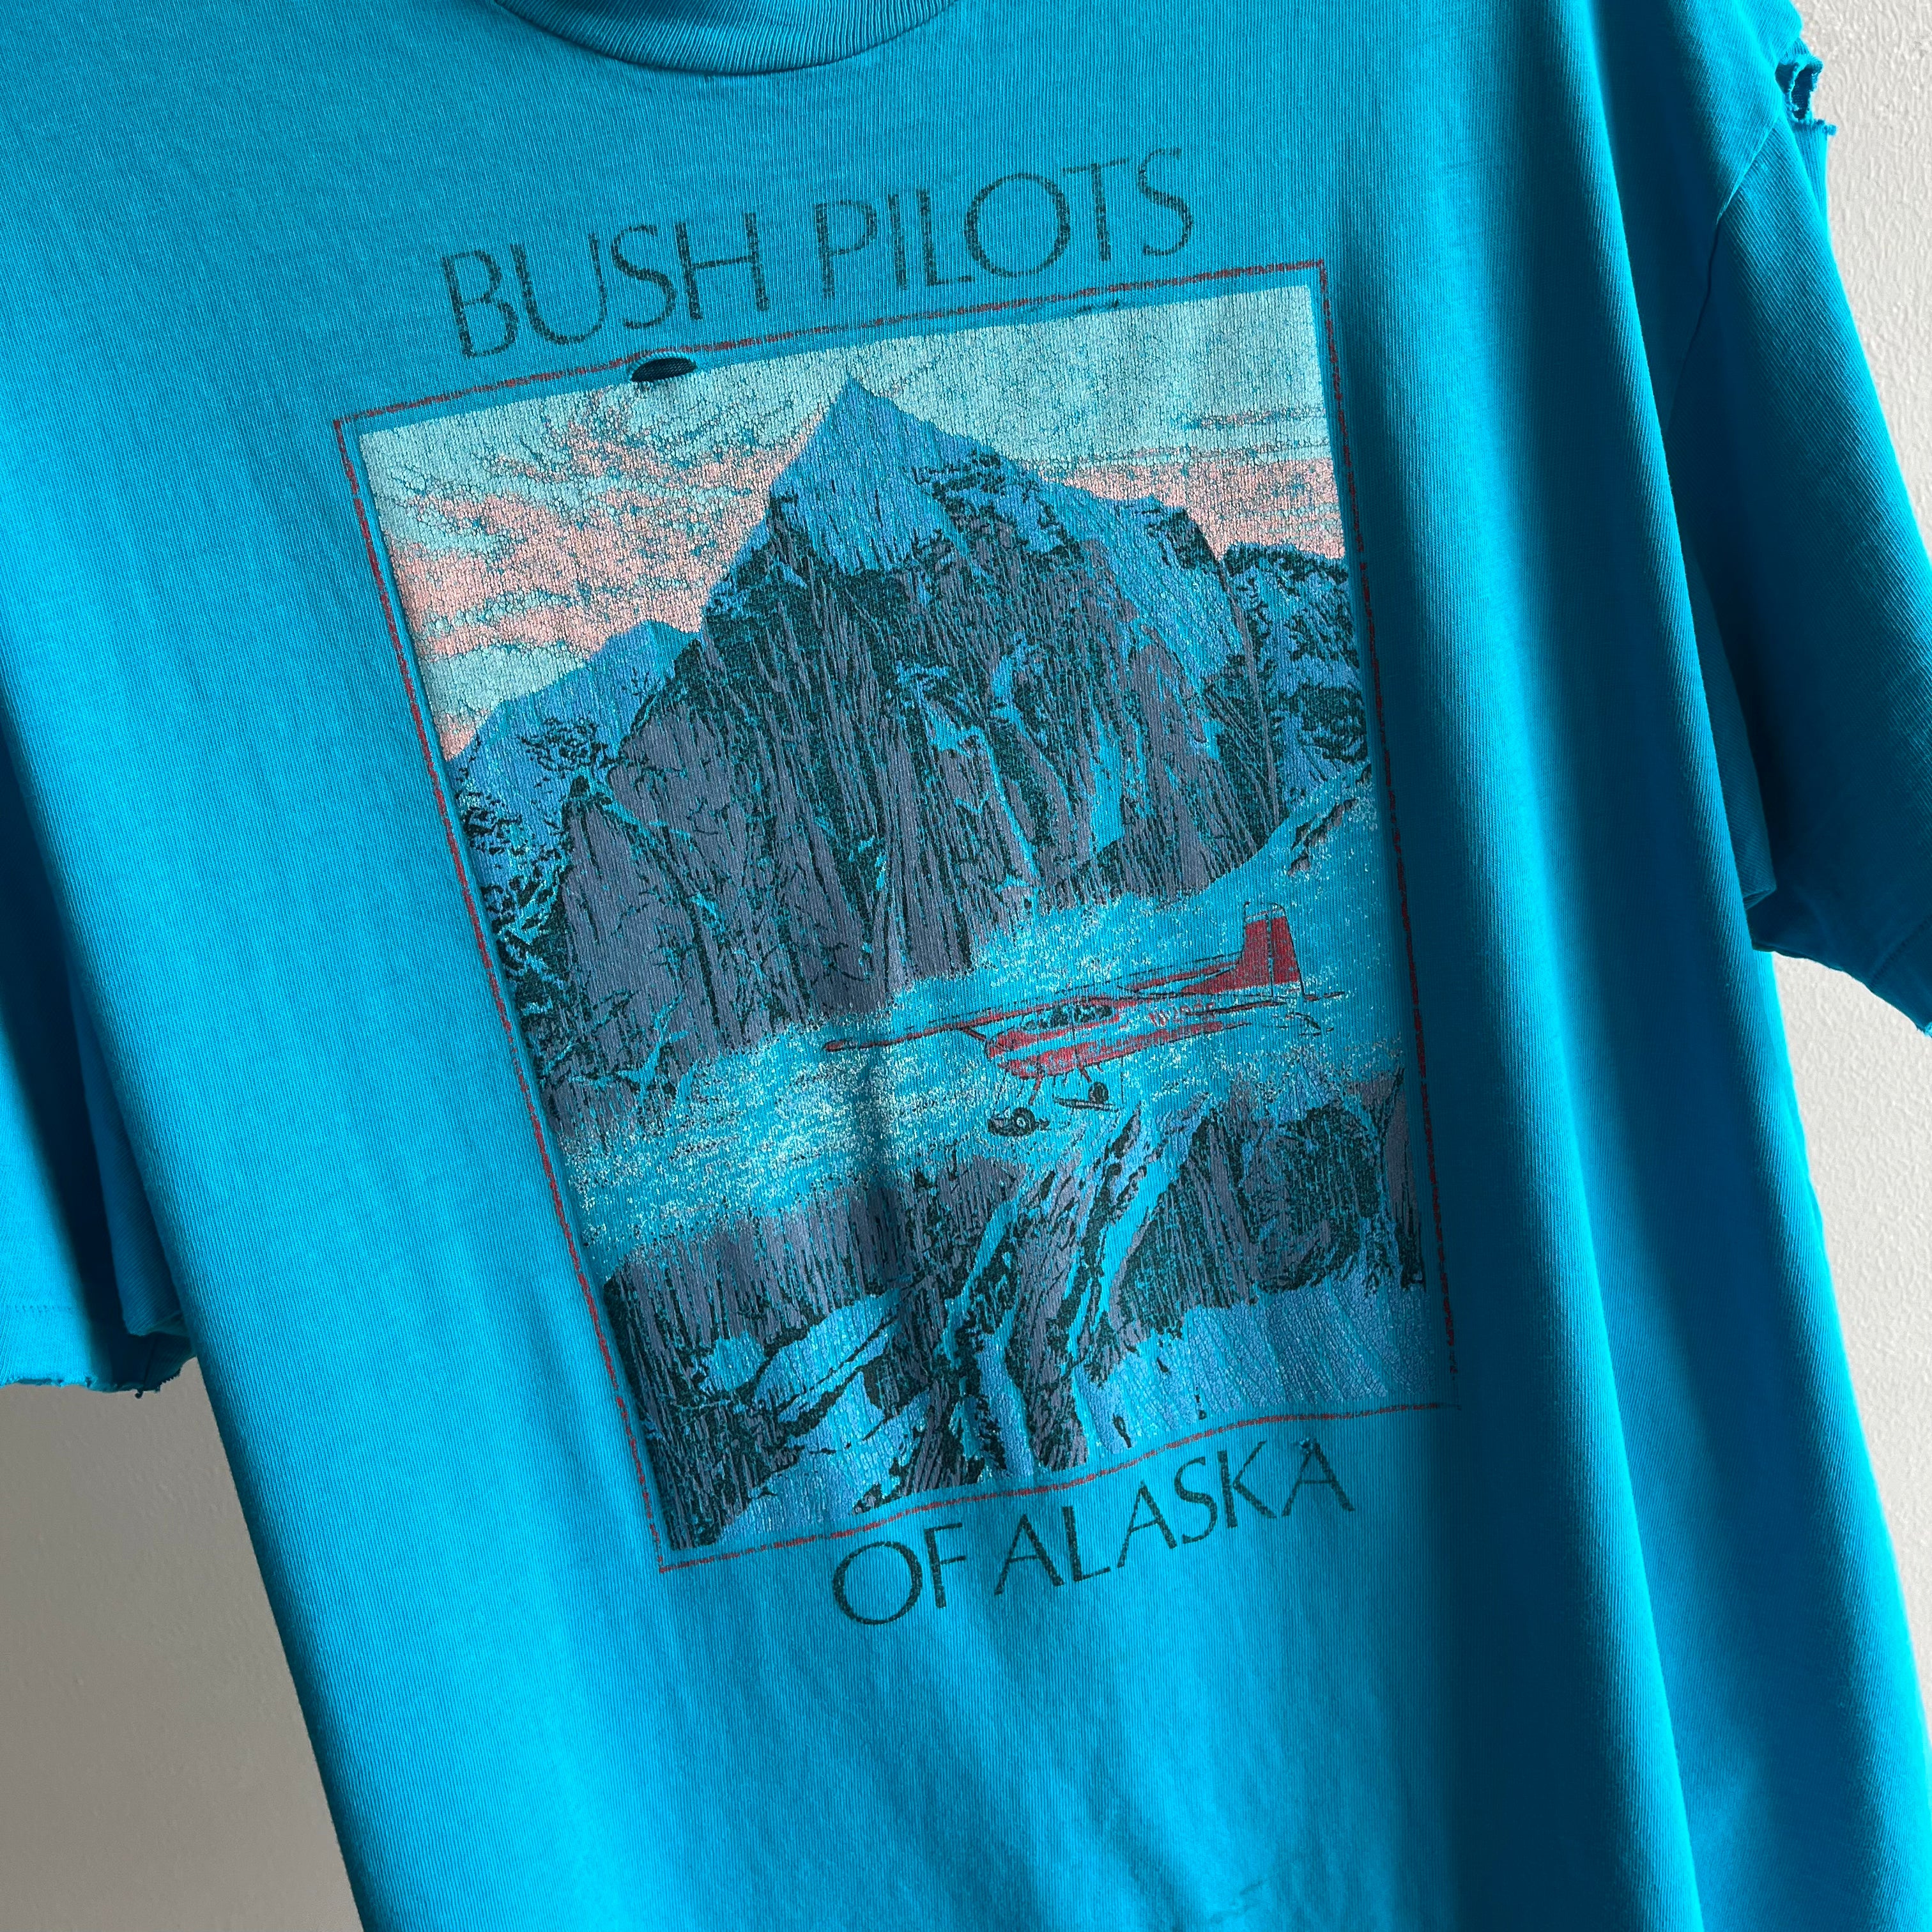 1980s Ultra Epically Rad Worn Thrashed Beat Up Bush Pilots of Alaska T-Shirt